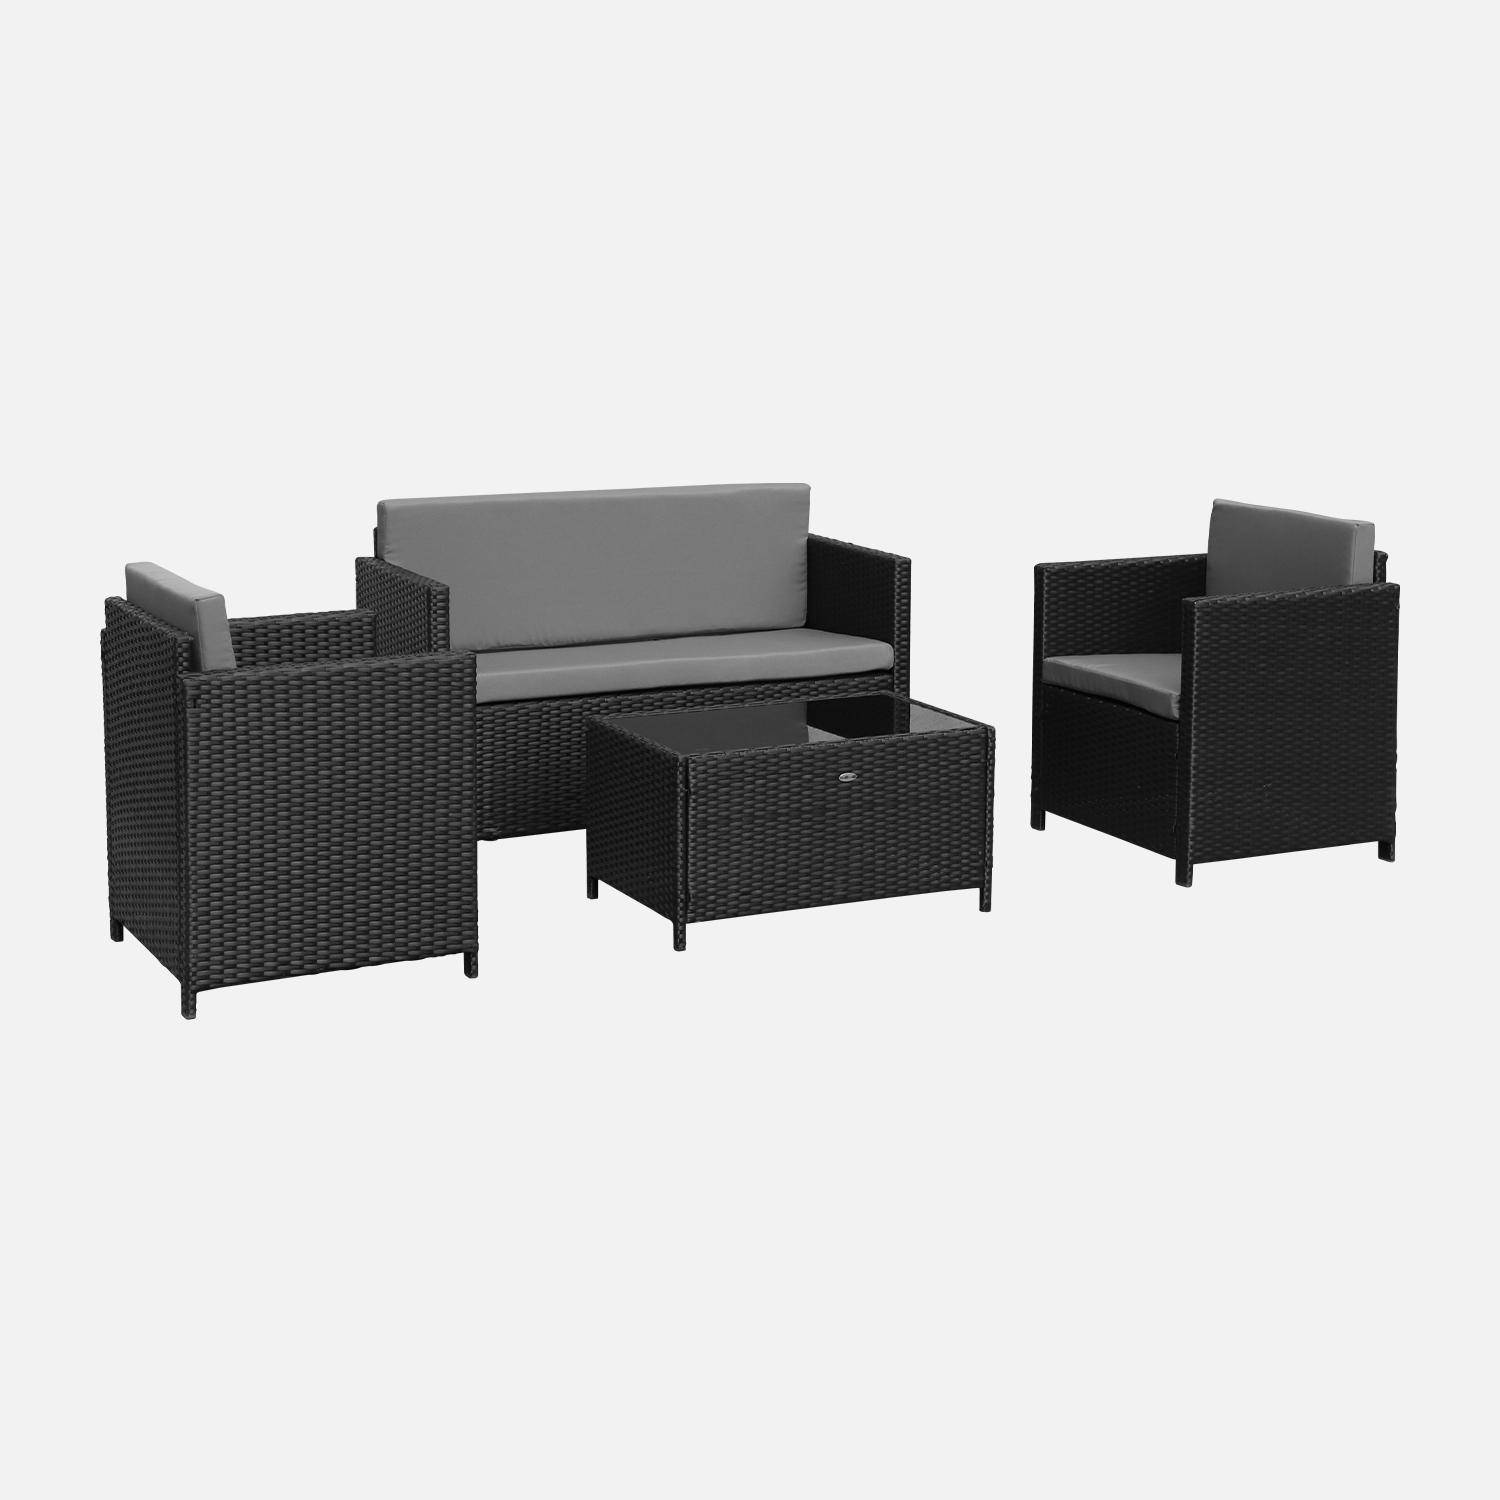 Muebles de jardín, conjunto sofá de exterior, negro gris, 4 plazas, rattan sintético, resina trenzada - Perugia Photo2